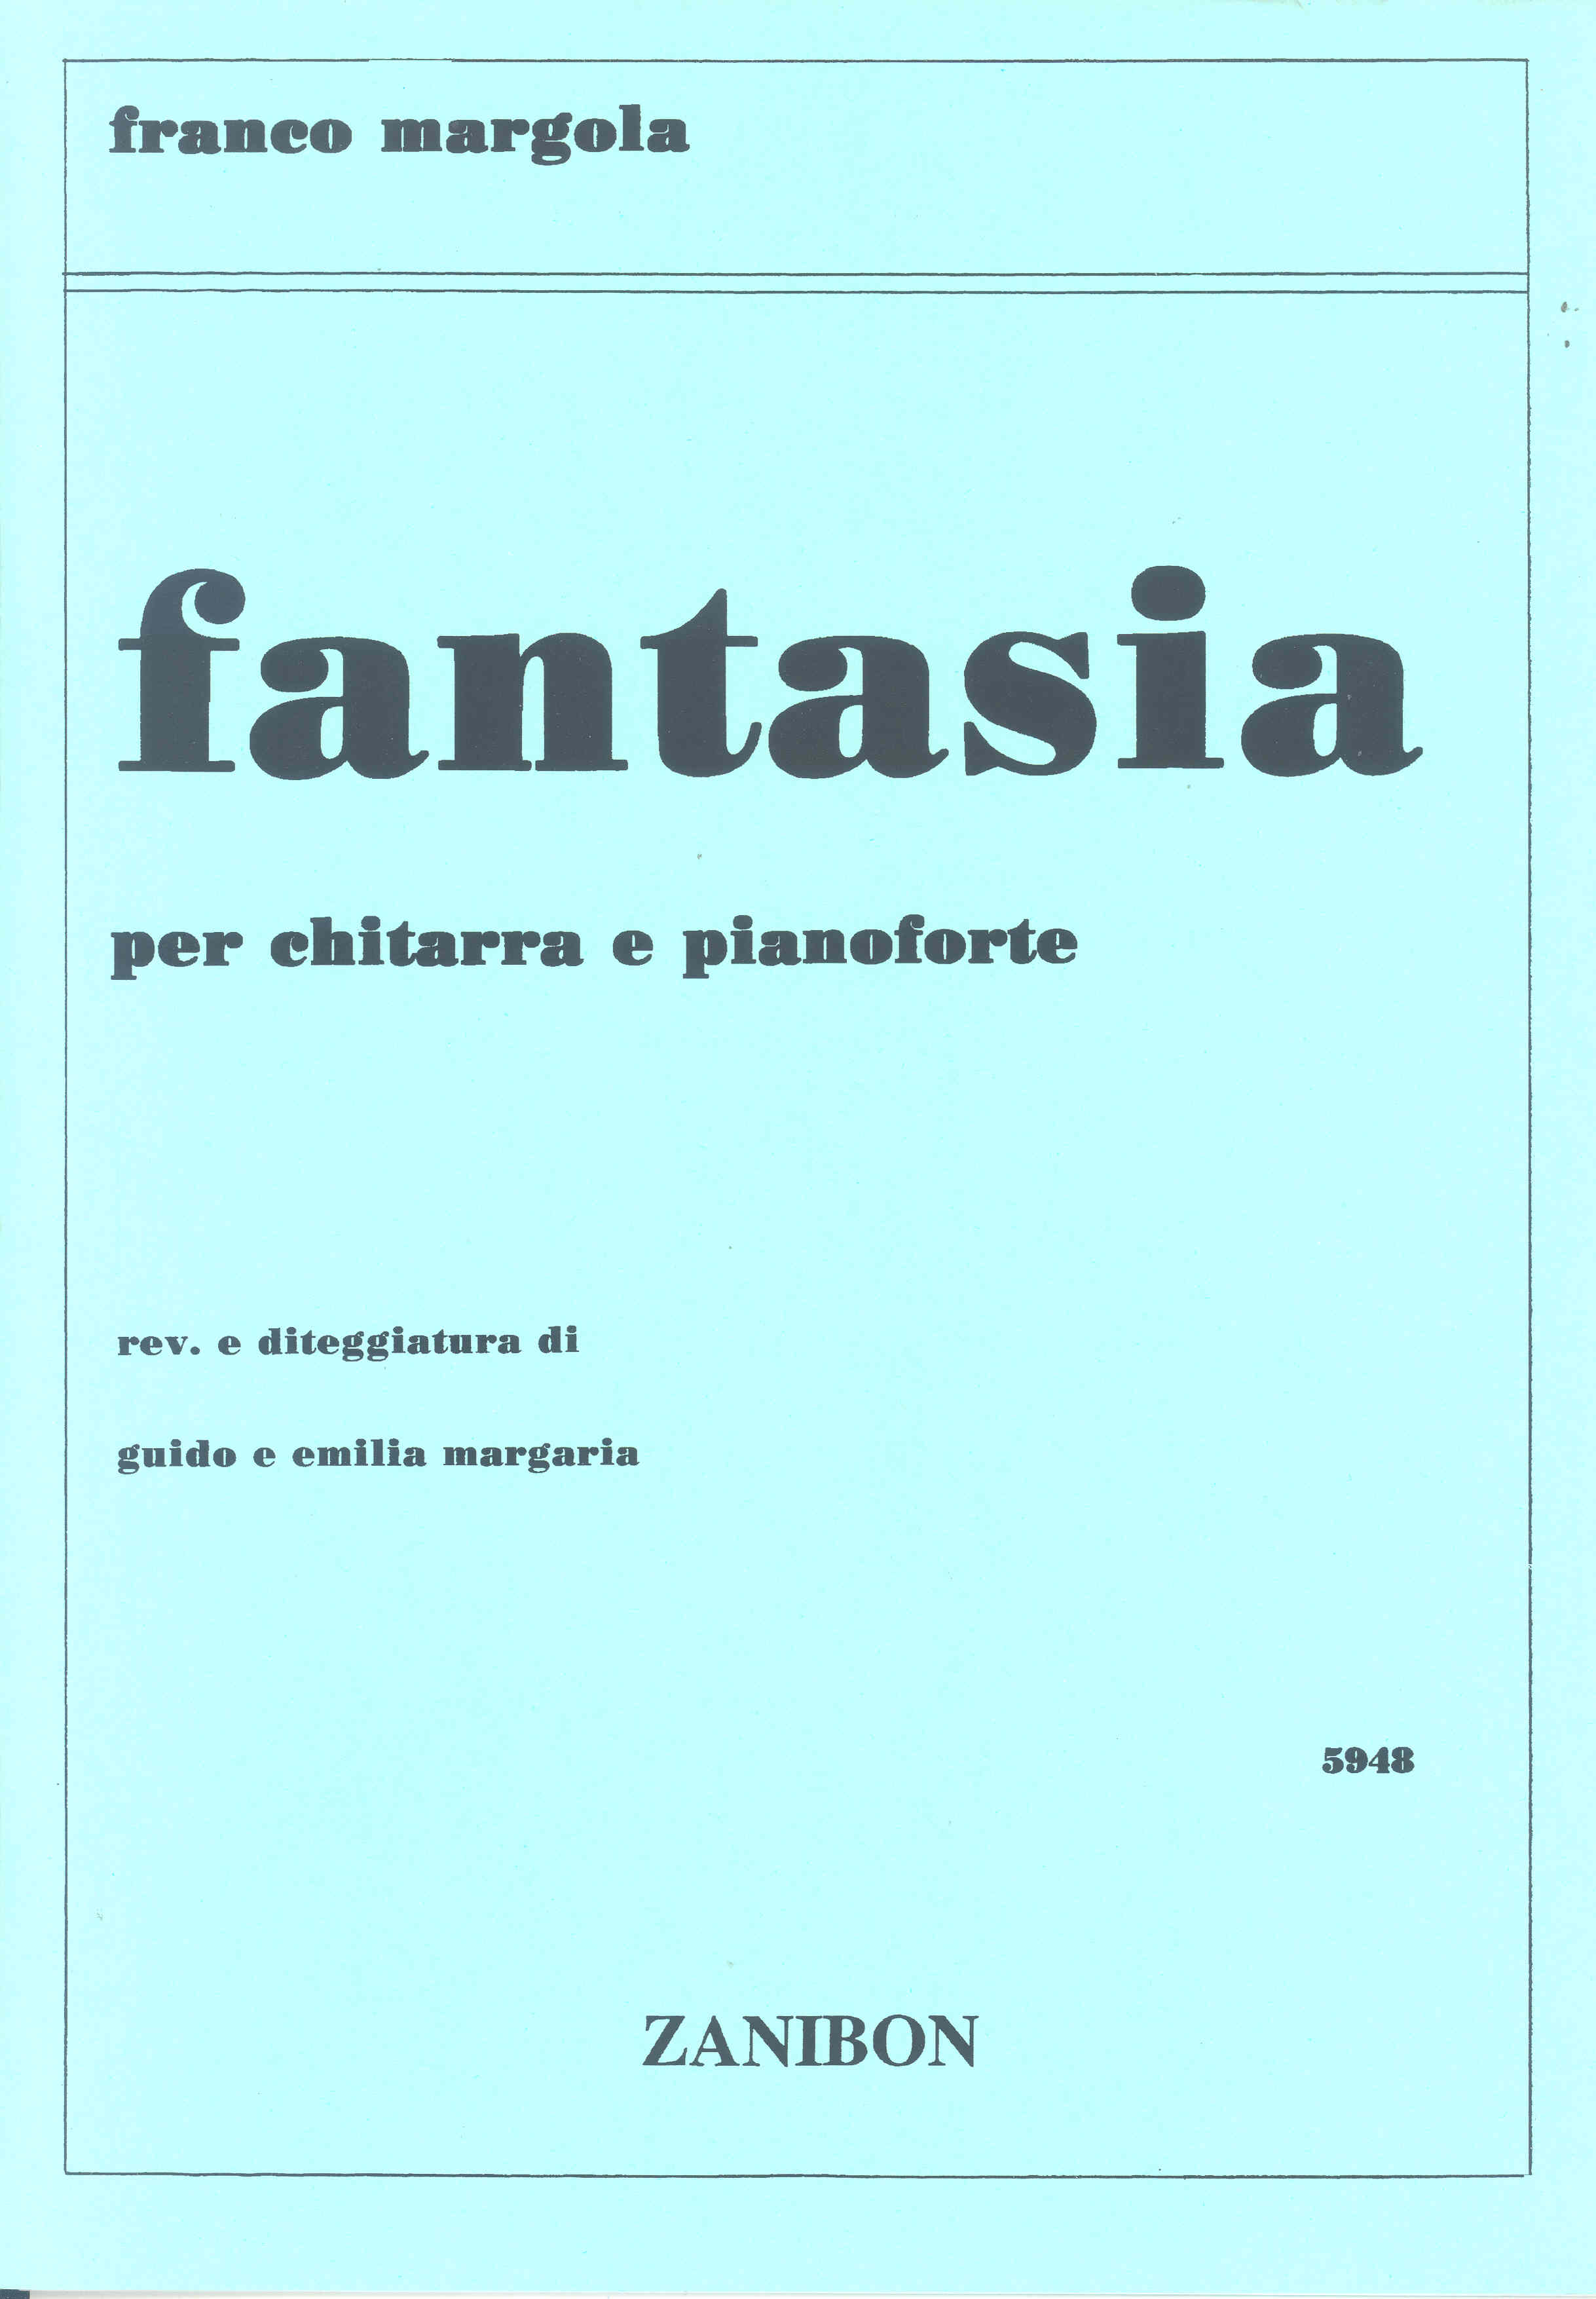 Margola Fantasia Guitar Sheet Music Songbook